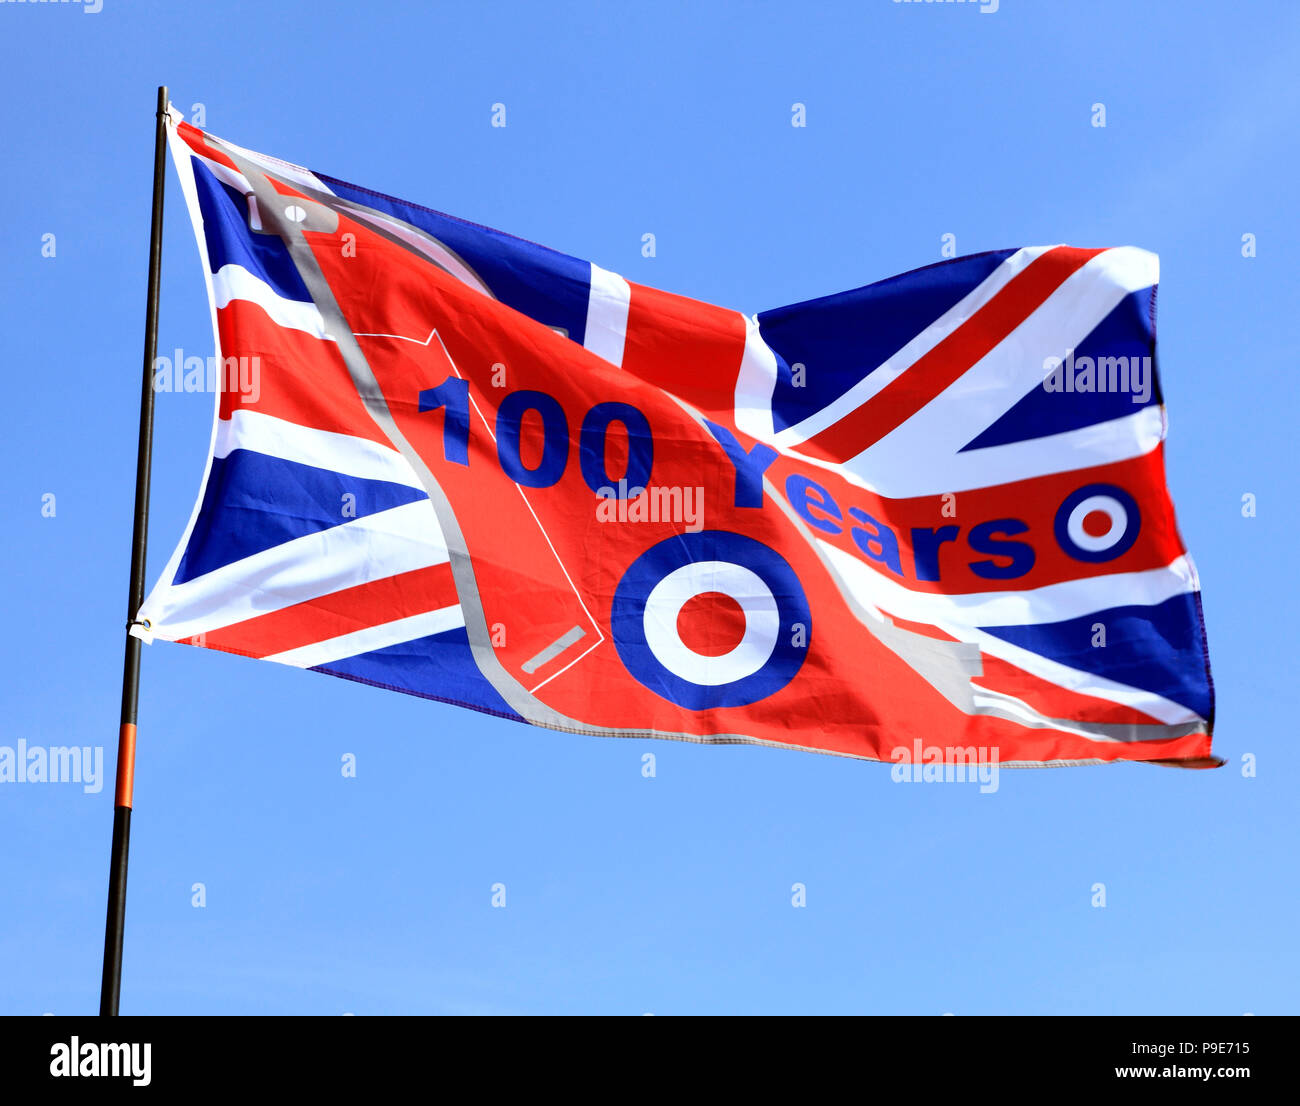 RAF, Royal Air Force, 100 Years, Centenary, commemorative flag, Union Jack, RAF logo Stock Photo